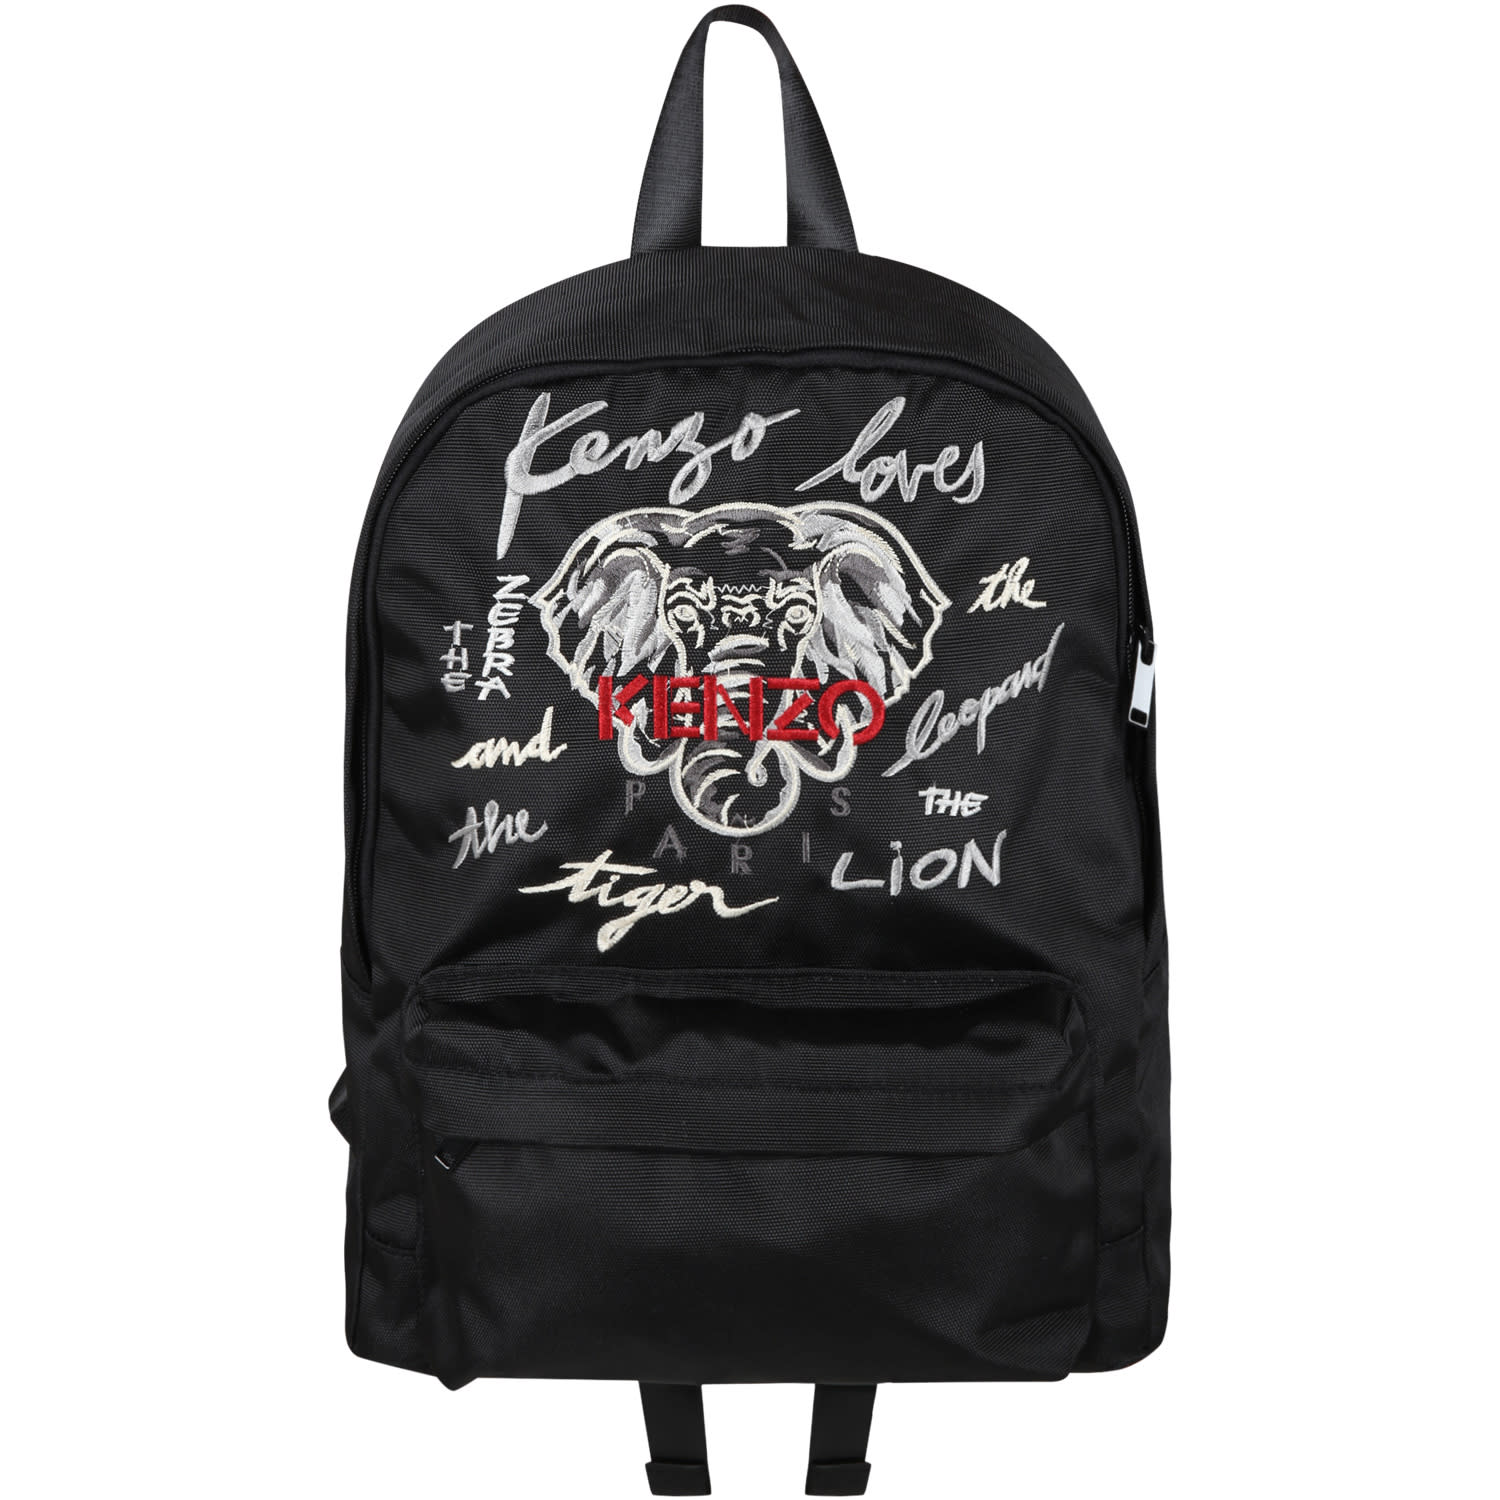 Kenzo Kids Black Backpack For Boy With Elephant